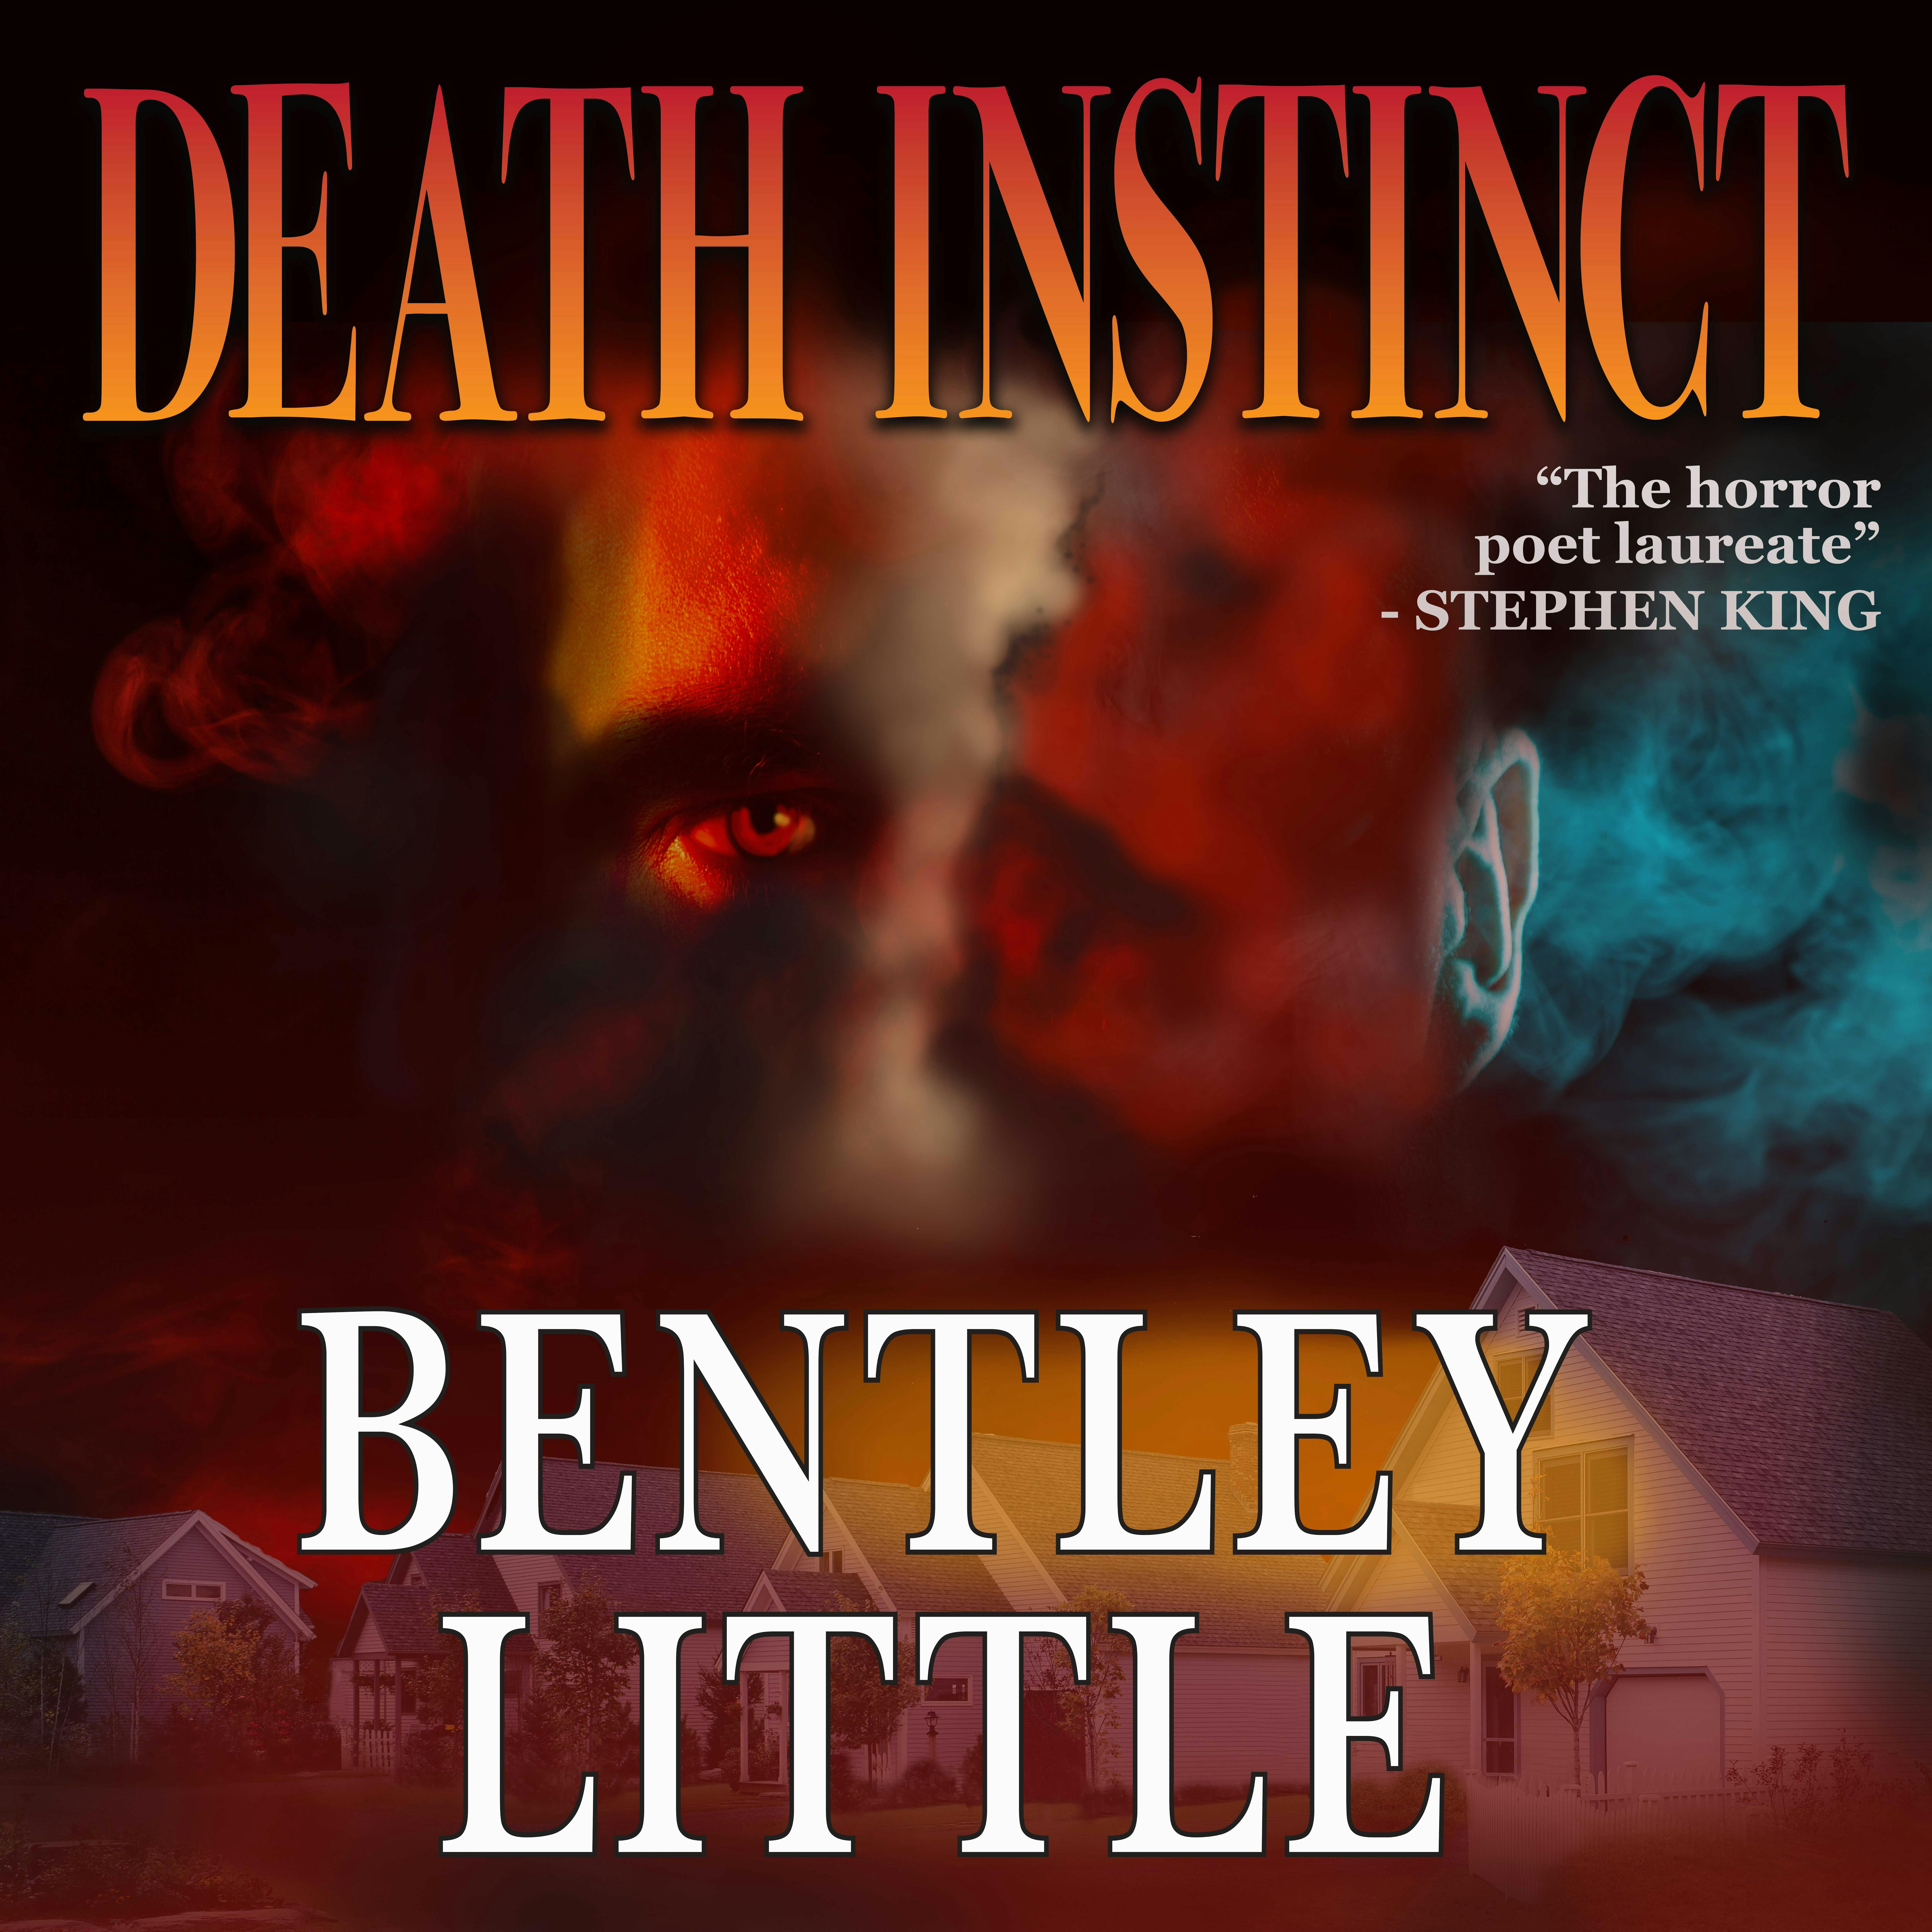 Death Instinct - Bentley Little